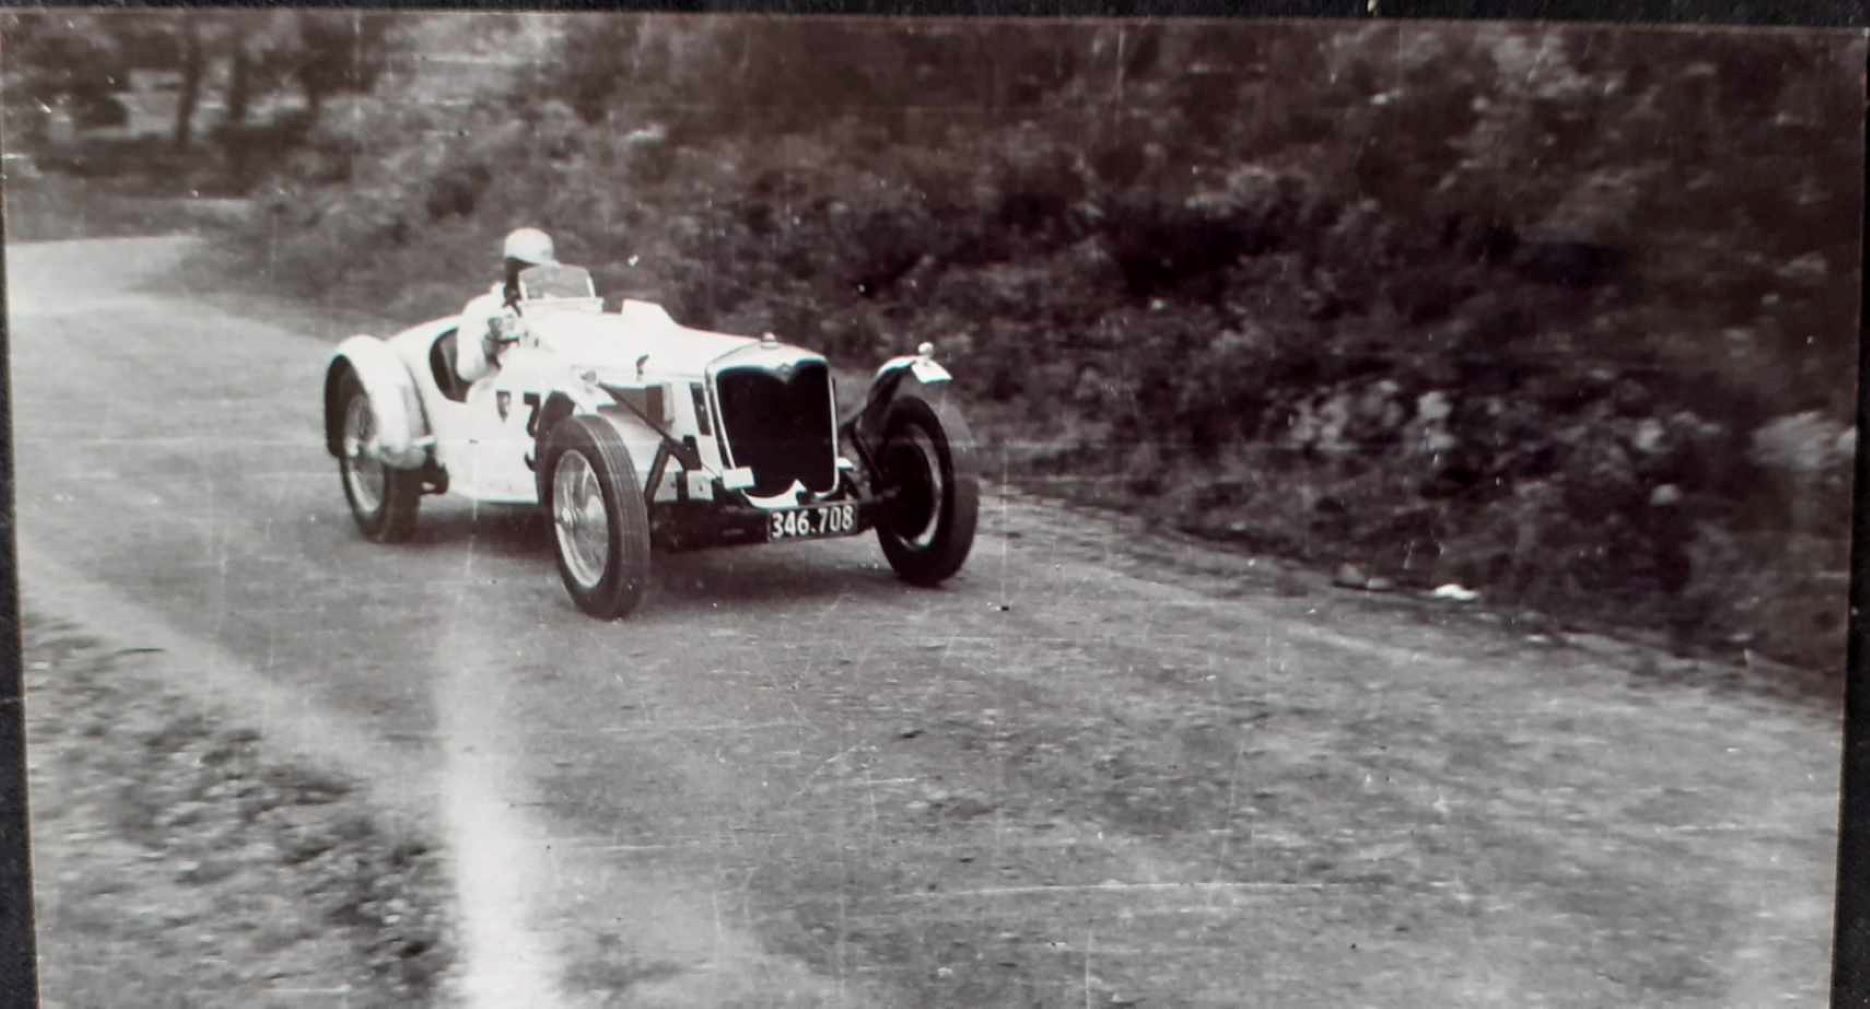 Name:  NSCC 1950 #0122 Riley Race #3 Q at Hill Climb - 346.708 1951 -56 plate 1950's - image Graeme Wel.jpg
Views: 267
Size:  178.4 KB